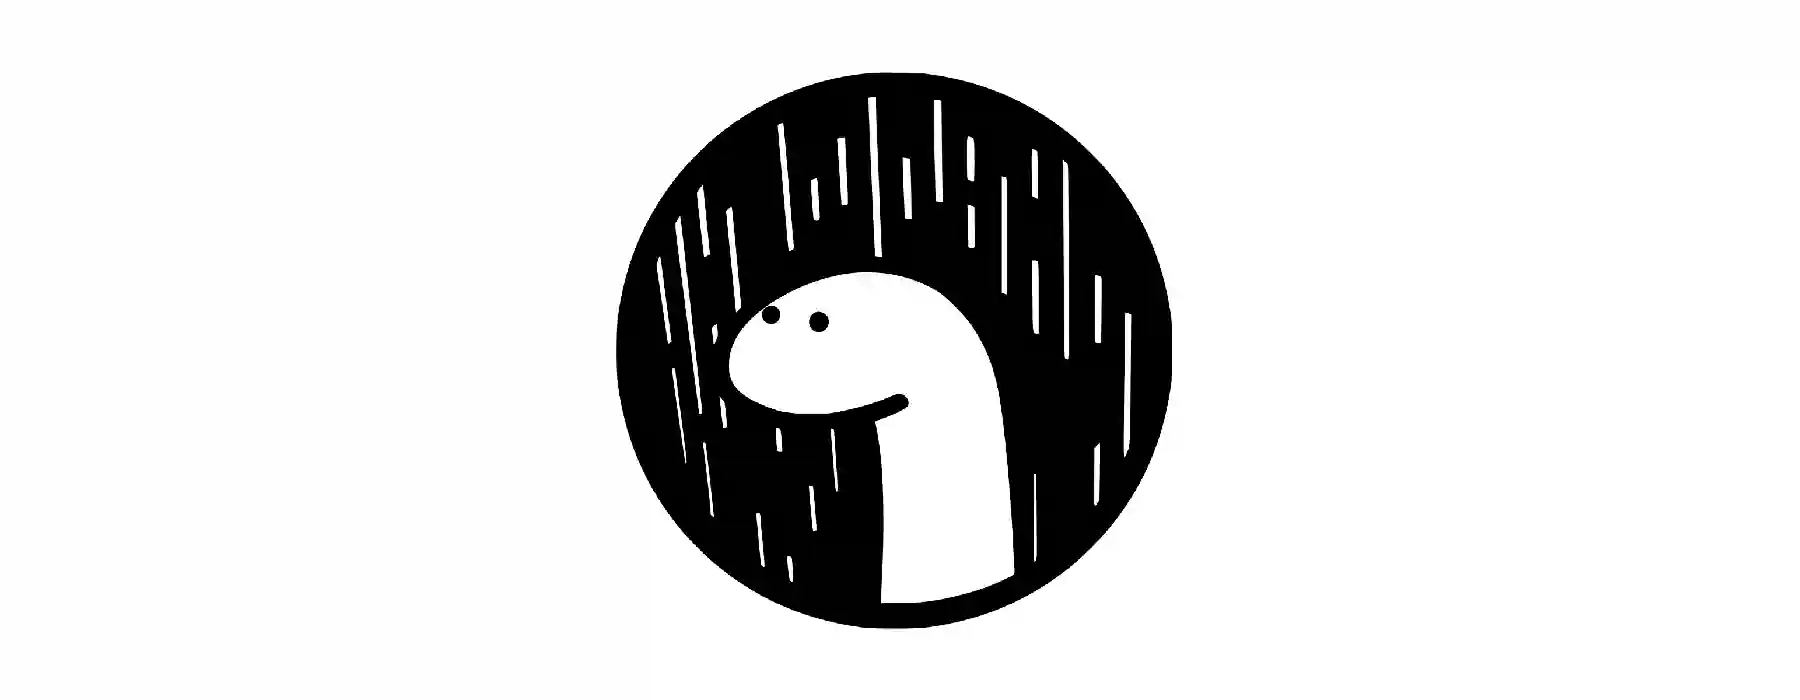 The Deno logo. A cute dinosaur with in a black circle